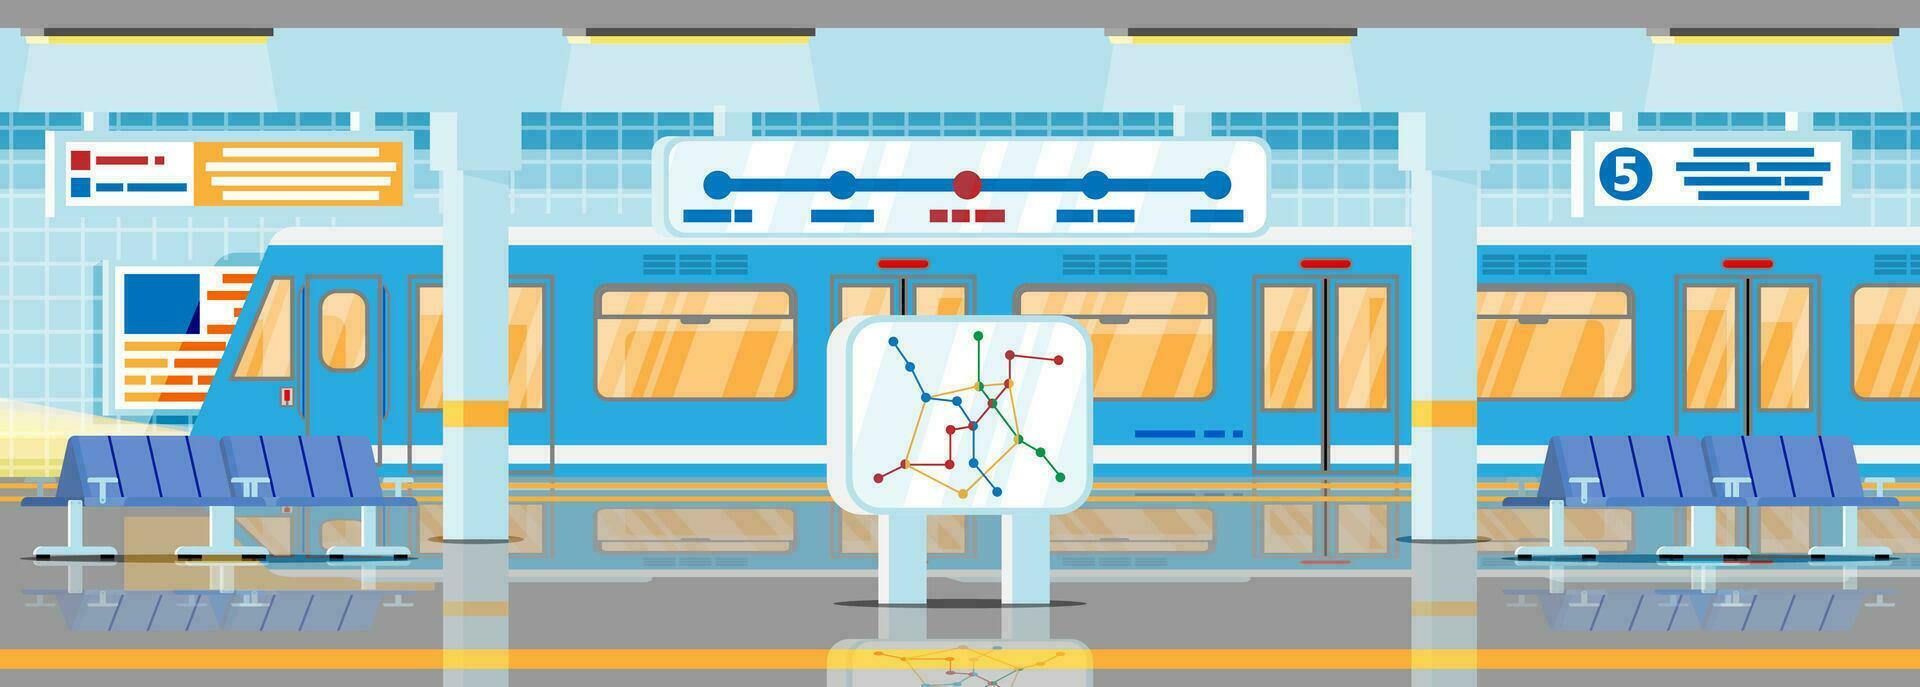 Empty Subway Station Interior. Train and Underground Platform. Railway Metro Station. Passenger Express Railway. Railroad Public Transportation. Rapid Transport. Flat Vector Illustration